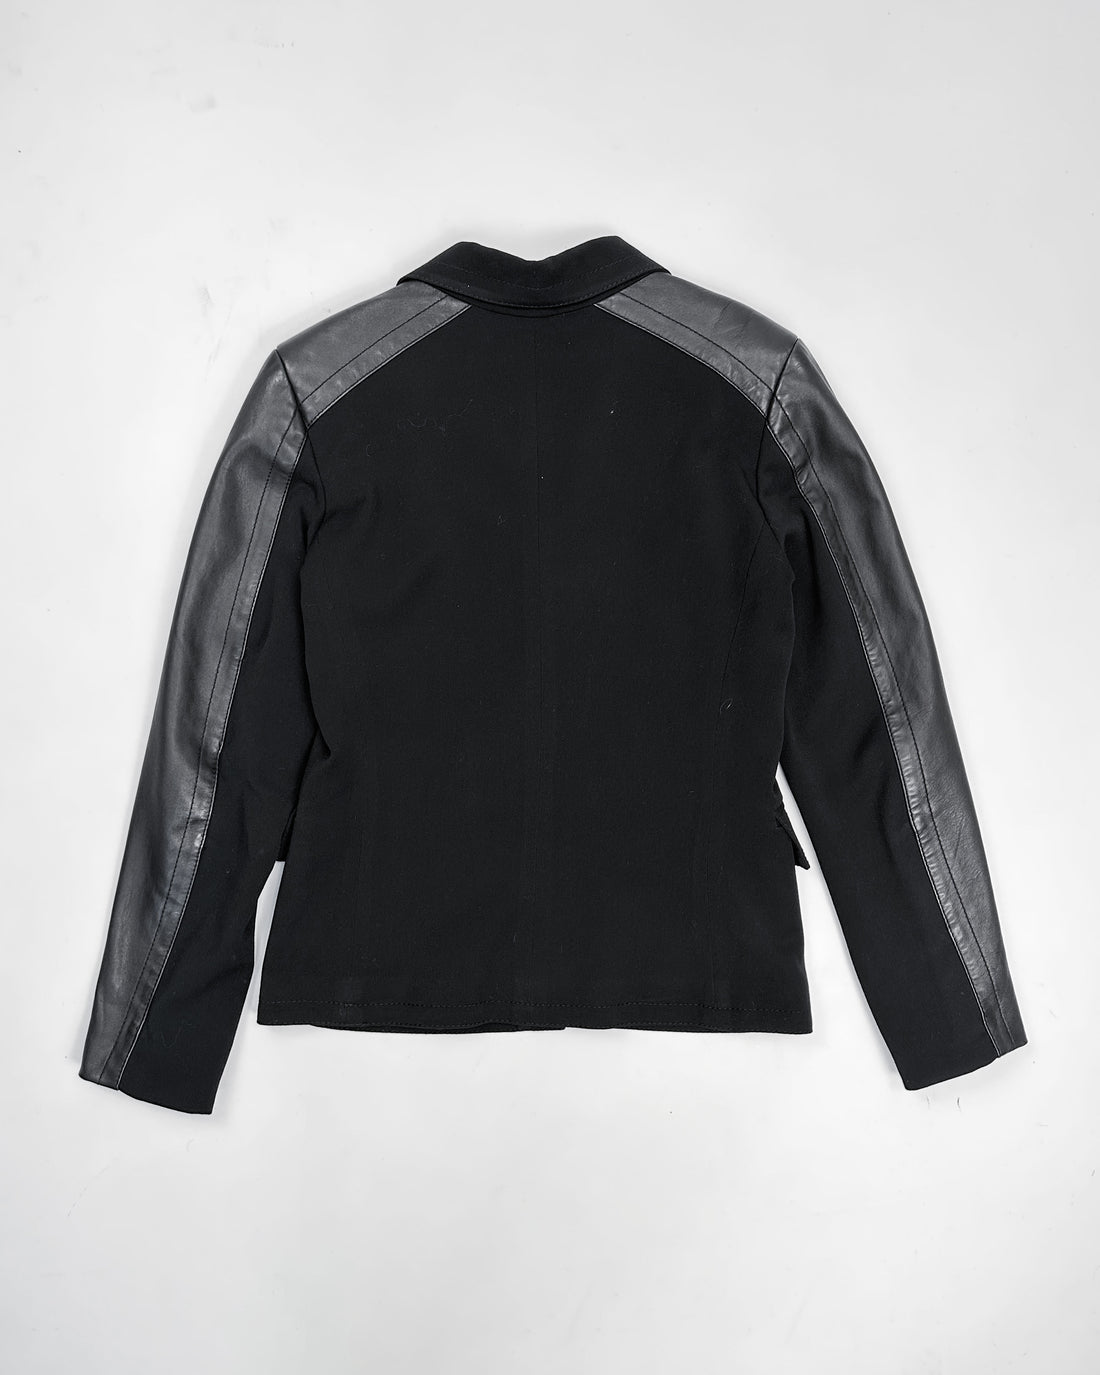 Dirk Bikkembergs Leather Sleeves Blazer Jacket 2000's